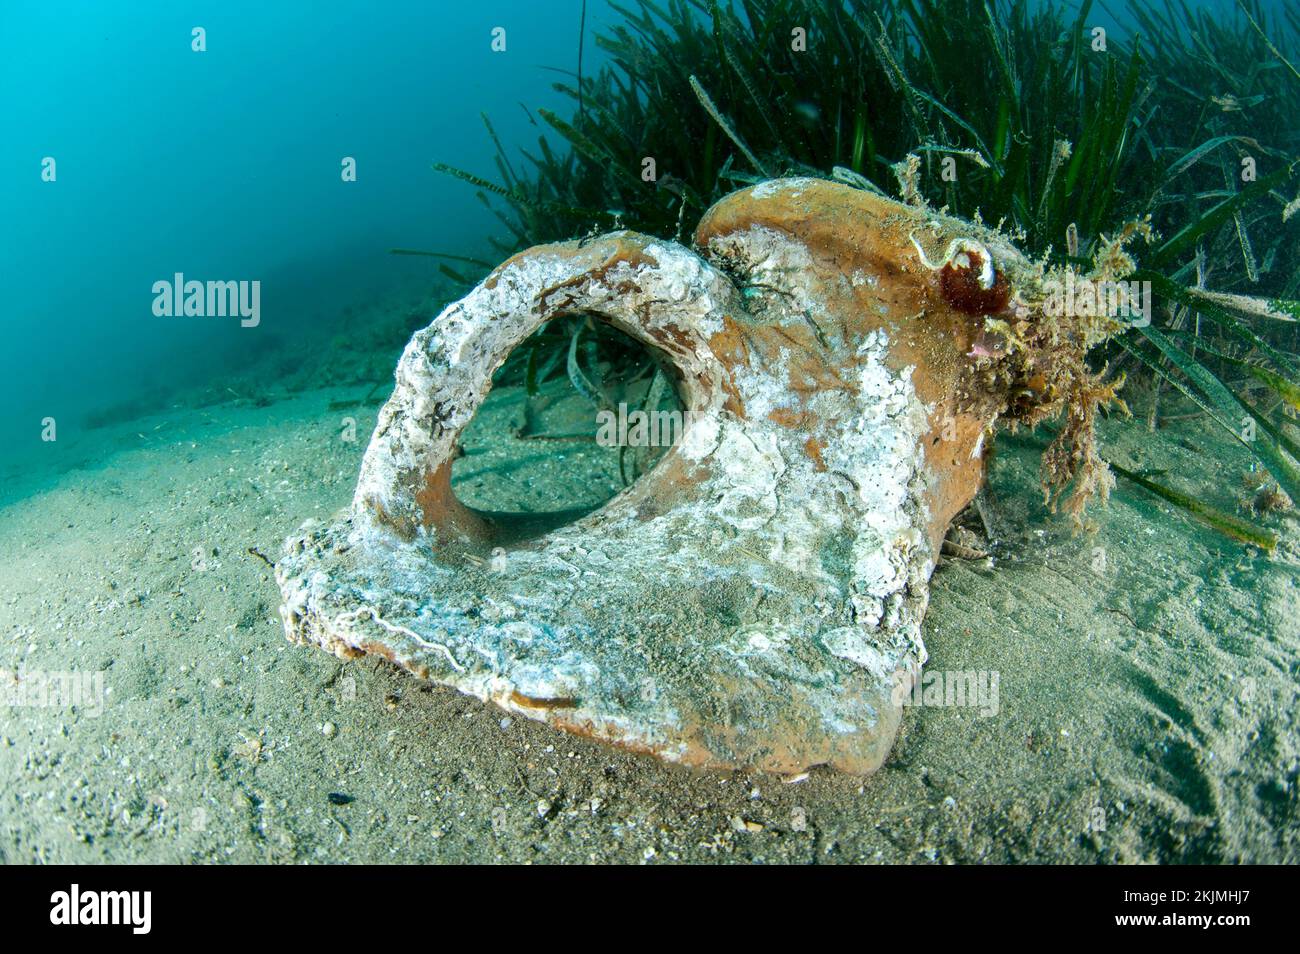 Roman amphora neck, 'côte agathoise' Marine Protected Area, gulf of Lion, Cap d'Agde, France, Europe Stock Photo